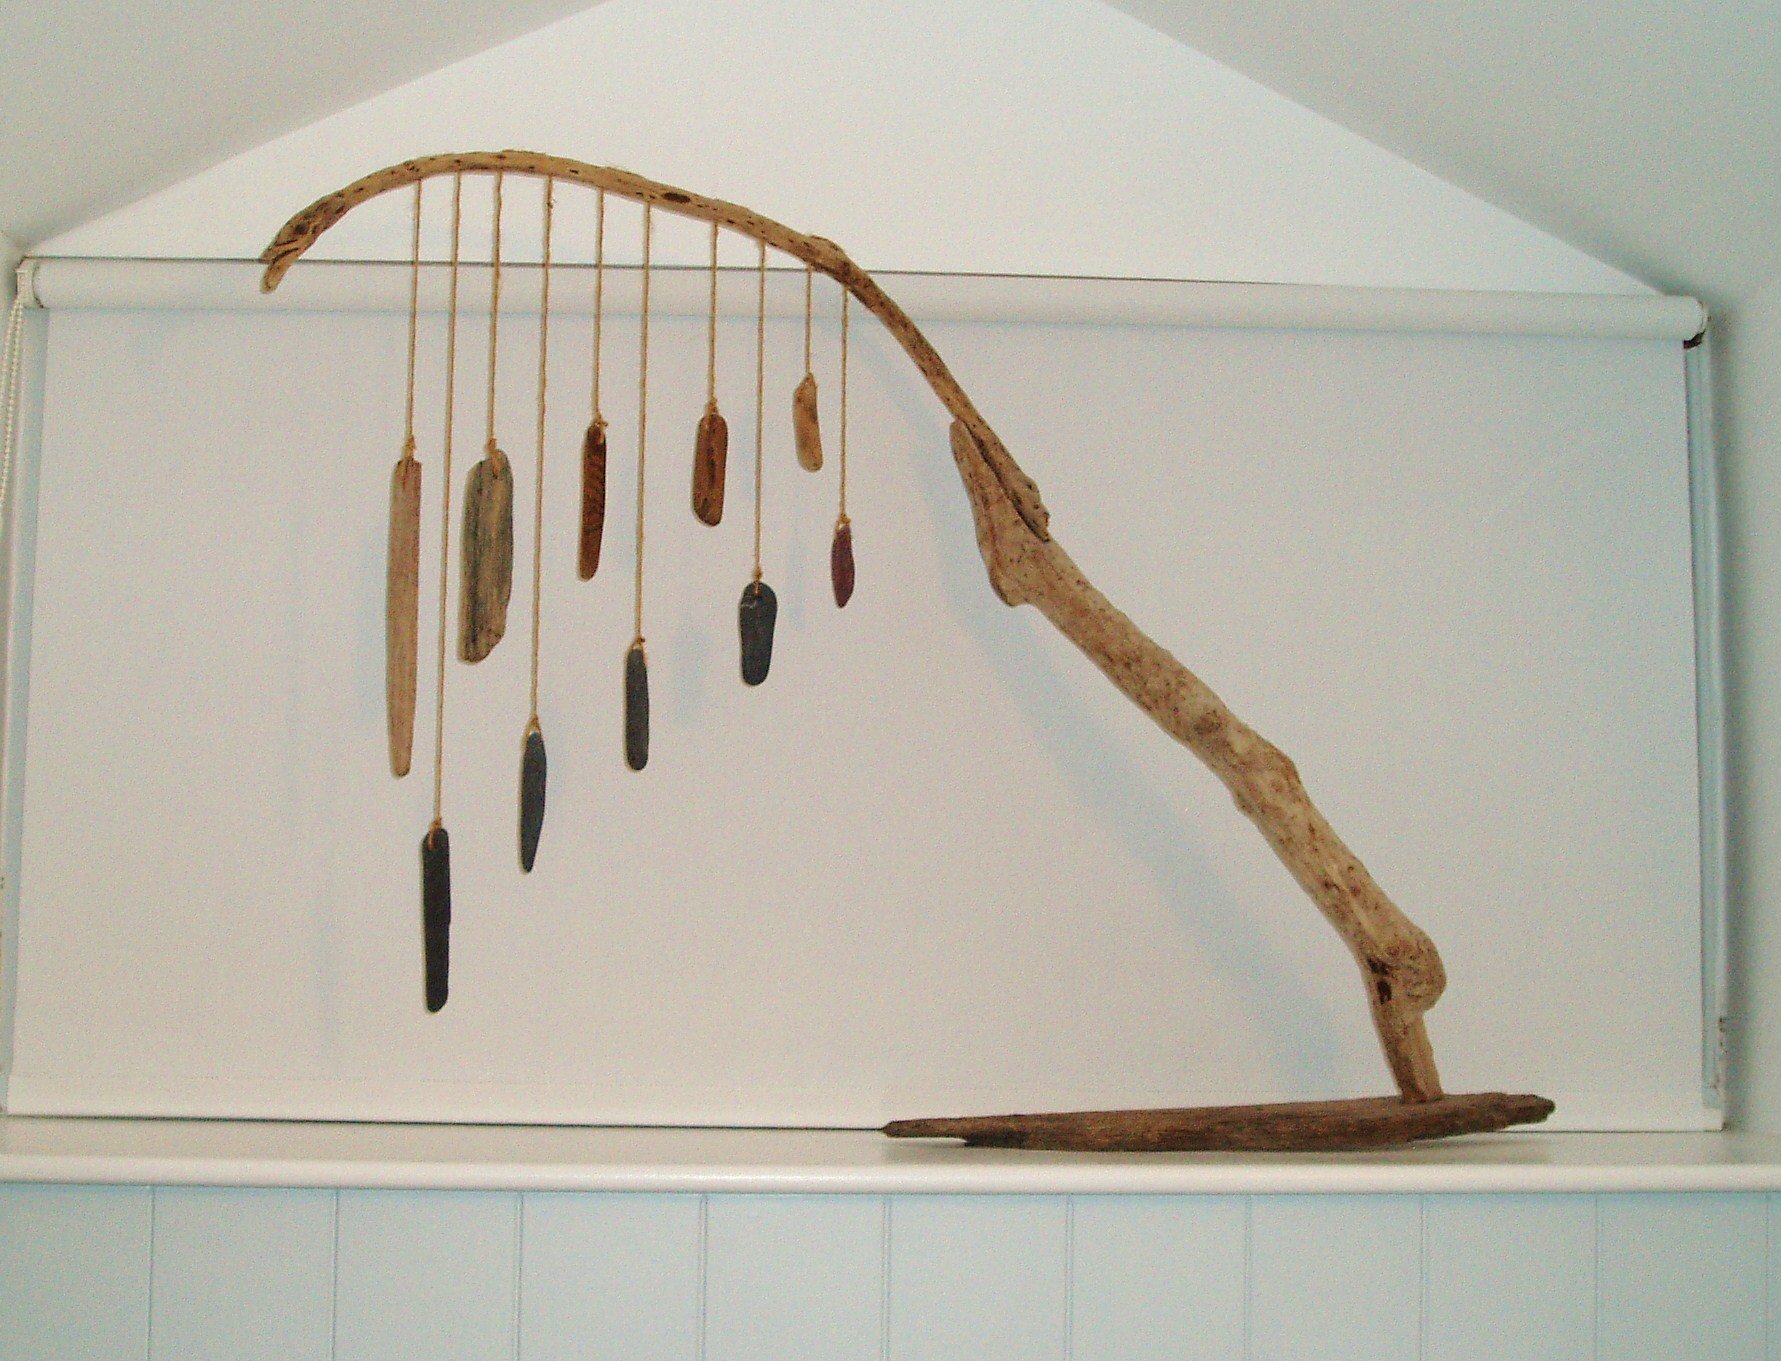 Sea harp